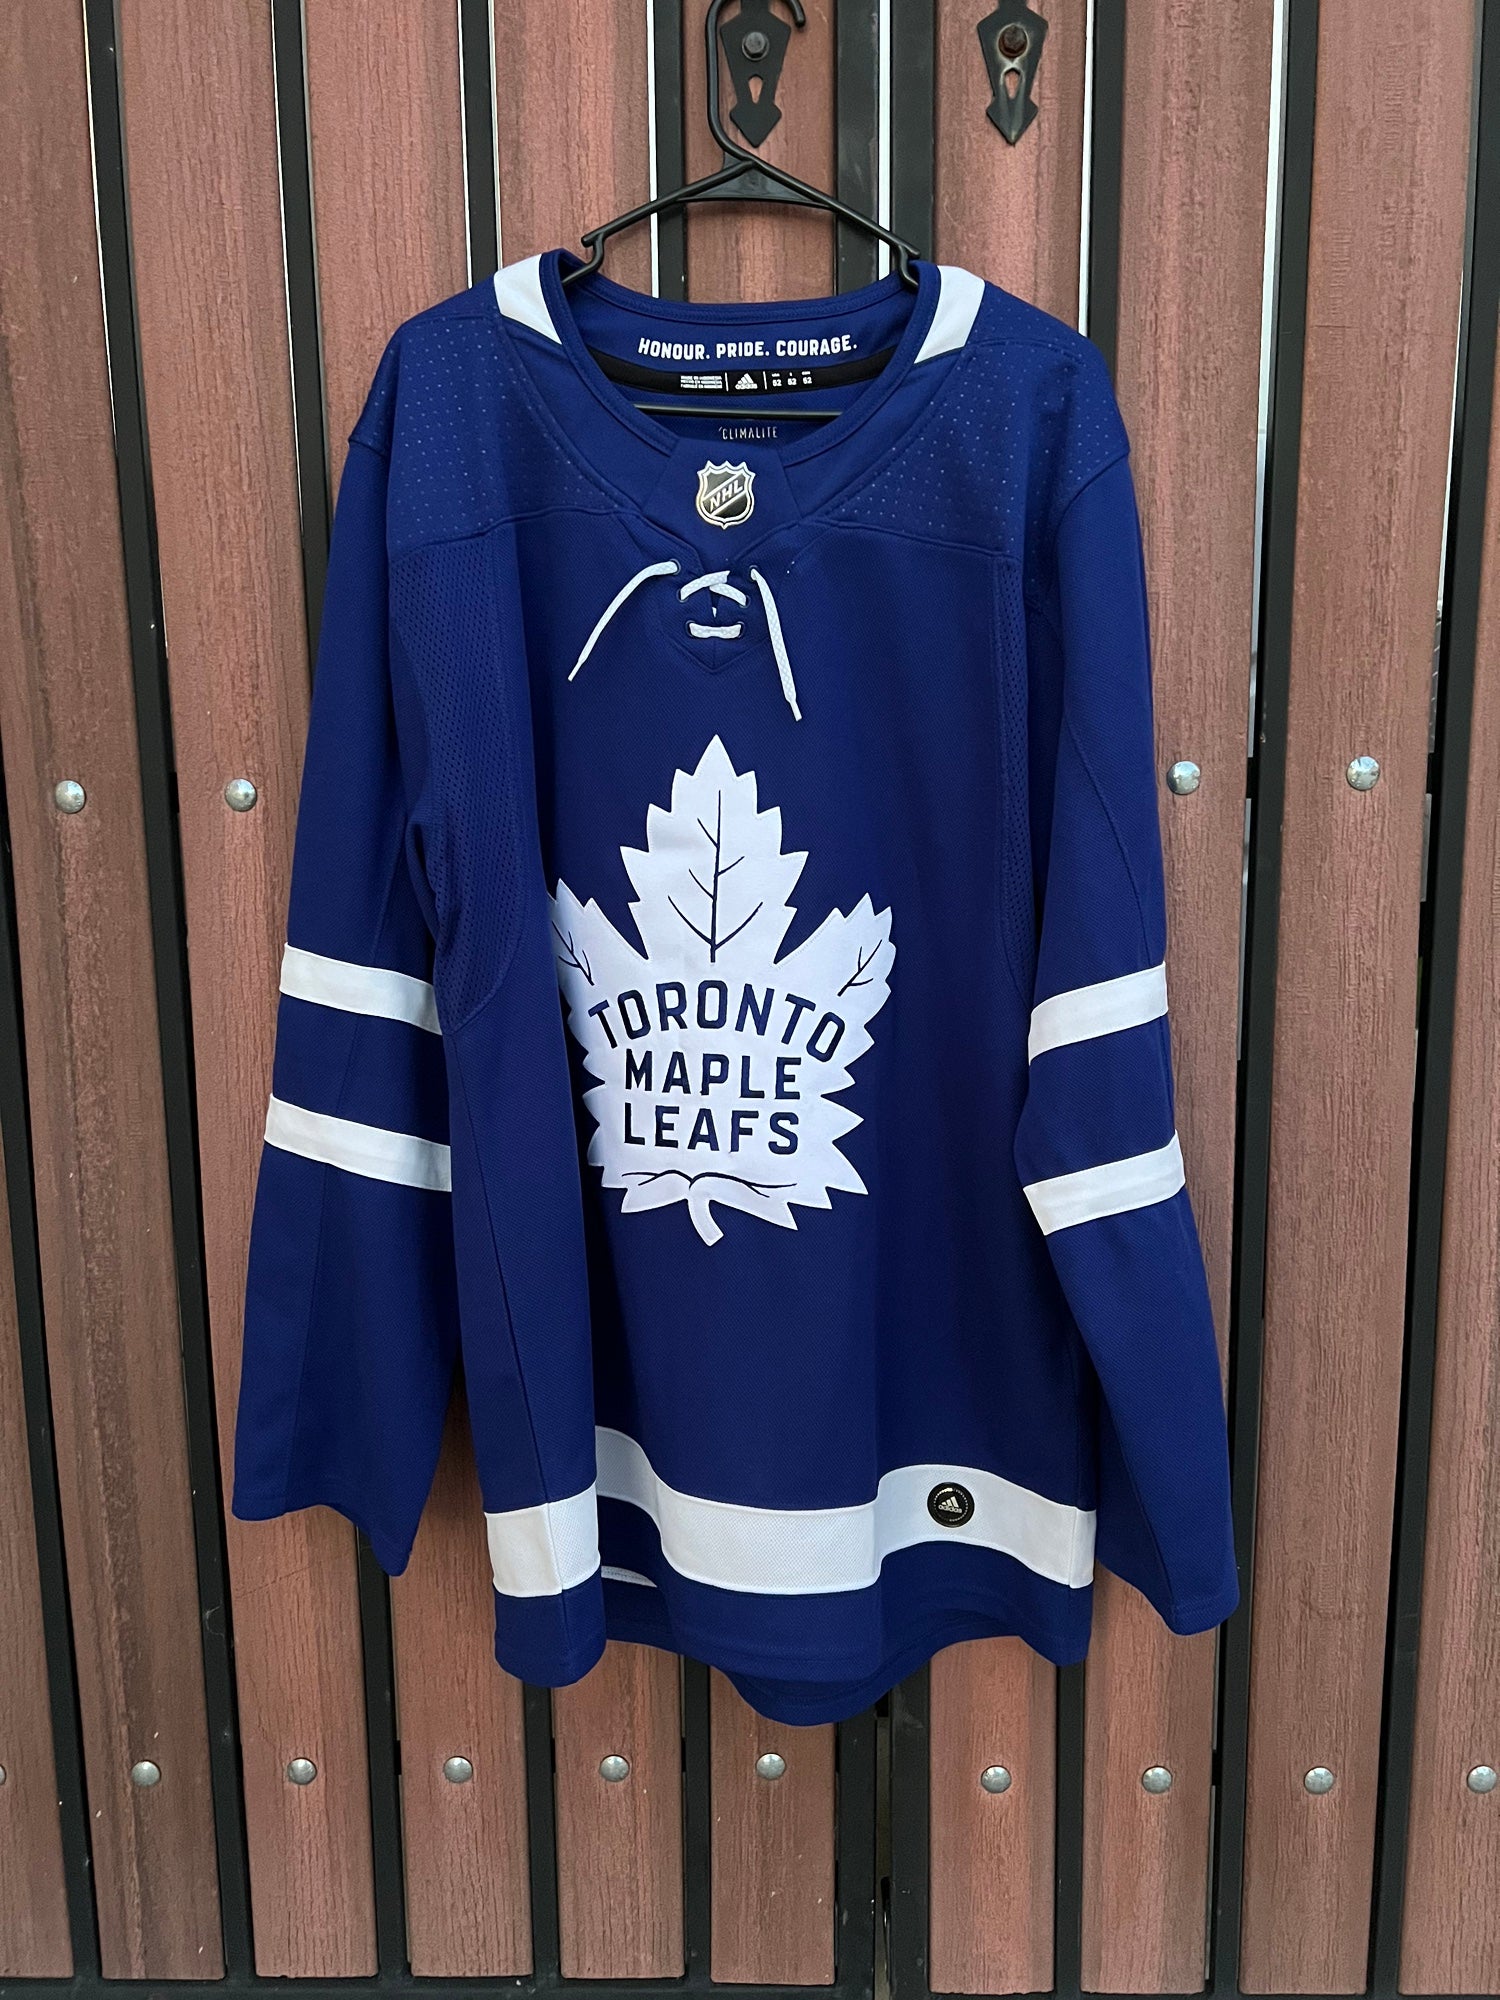 adidas Toronto Maple Leafs NHL Men's Climalite Authentic Team Hockey Jersey